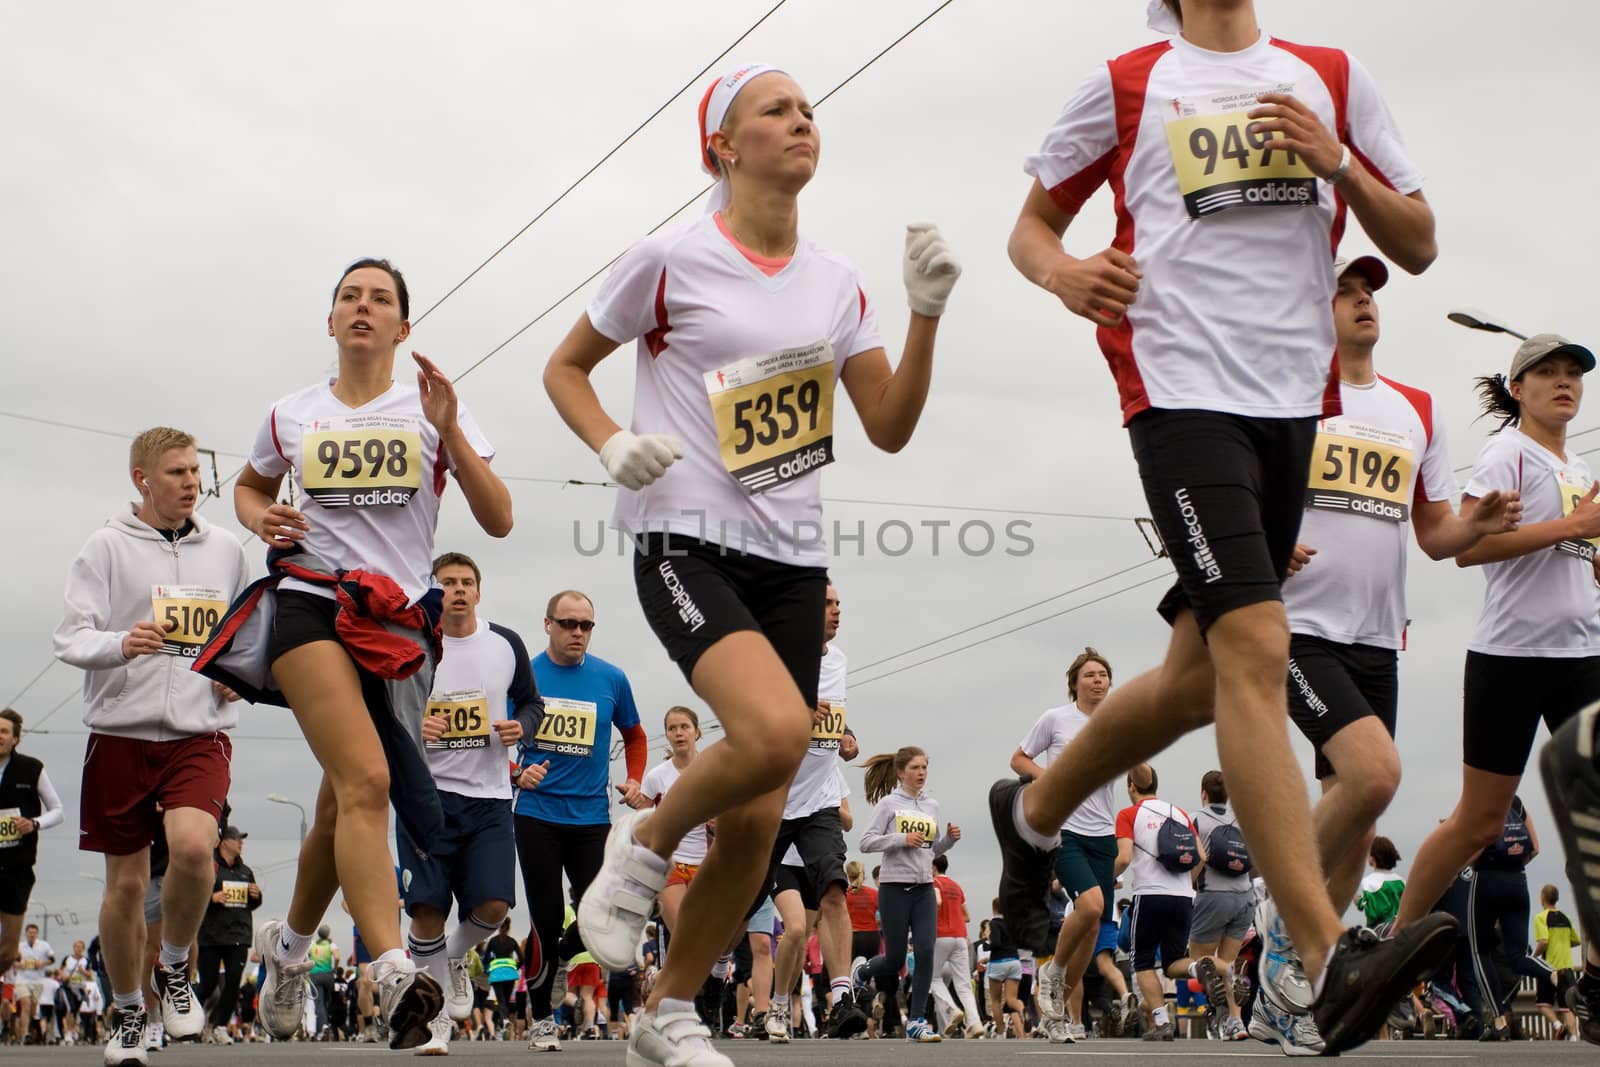 Marathon runners by ints